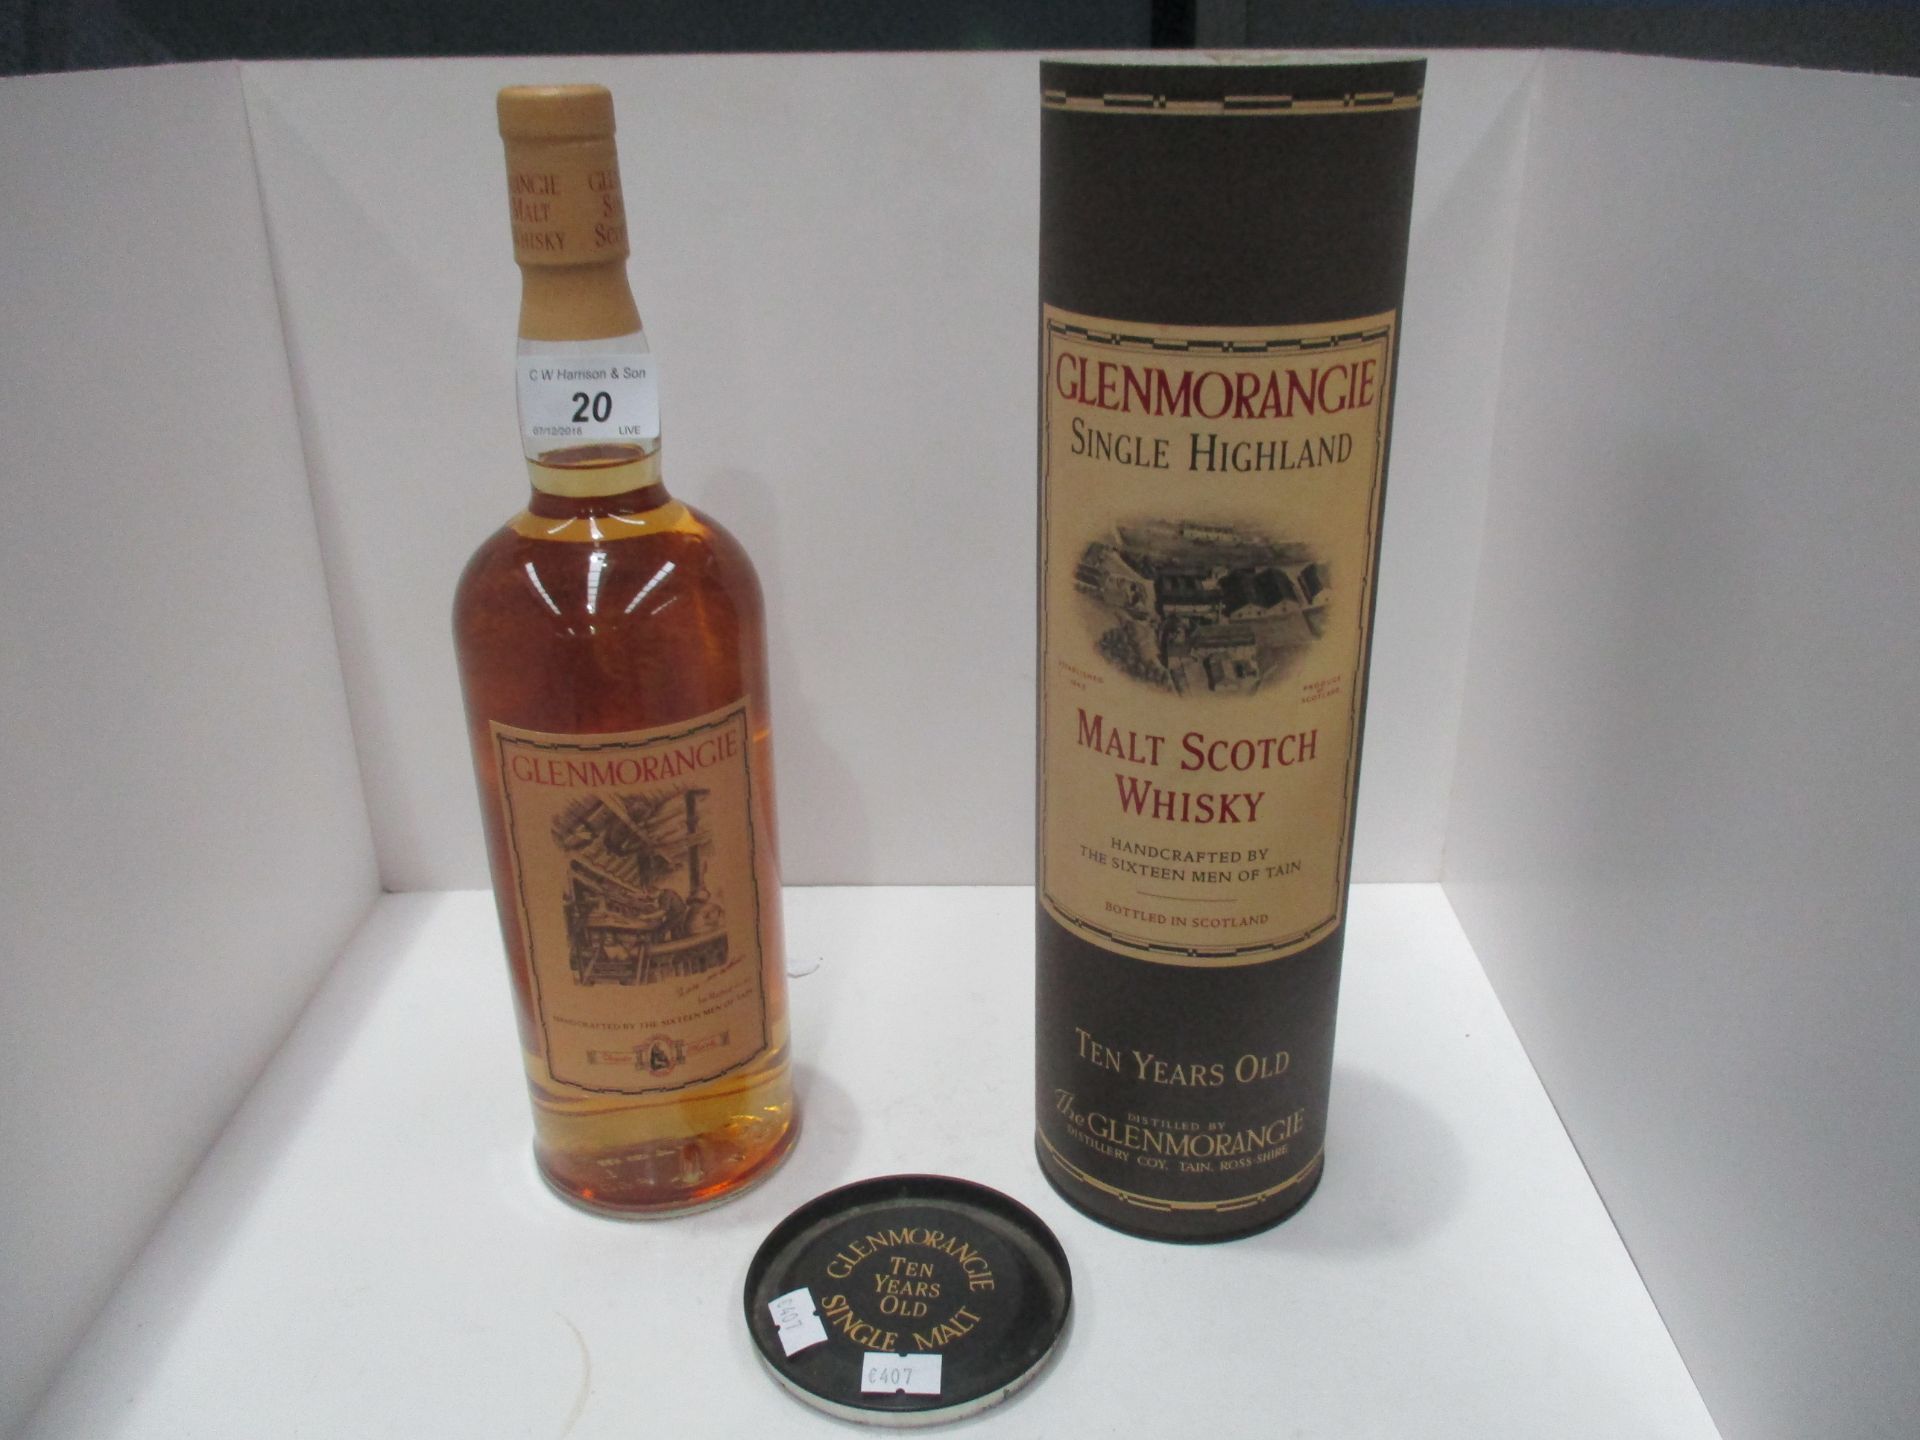 A 1 litre bottle of Glenmorangie ten years old Single Highland Malt Scotch Whisky in presentation